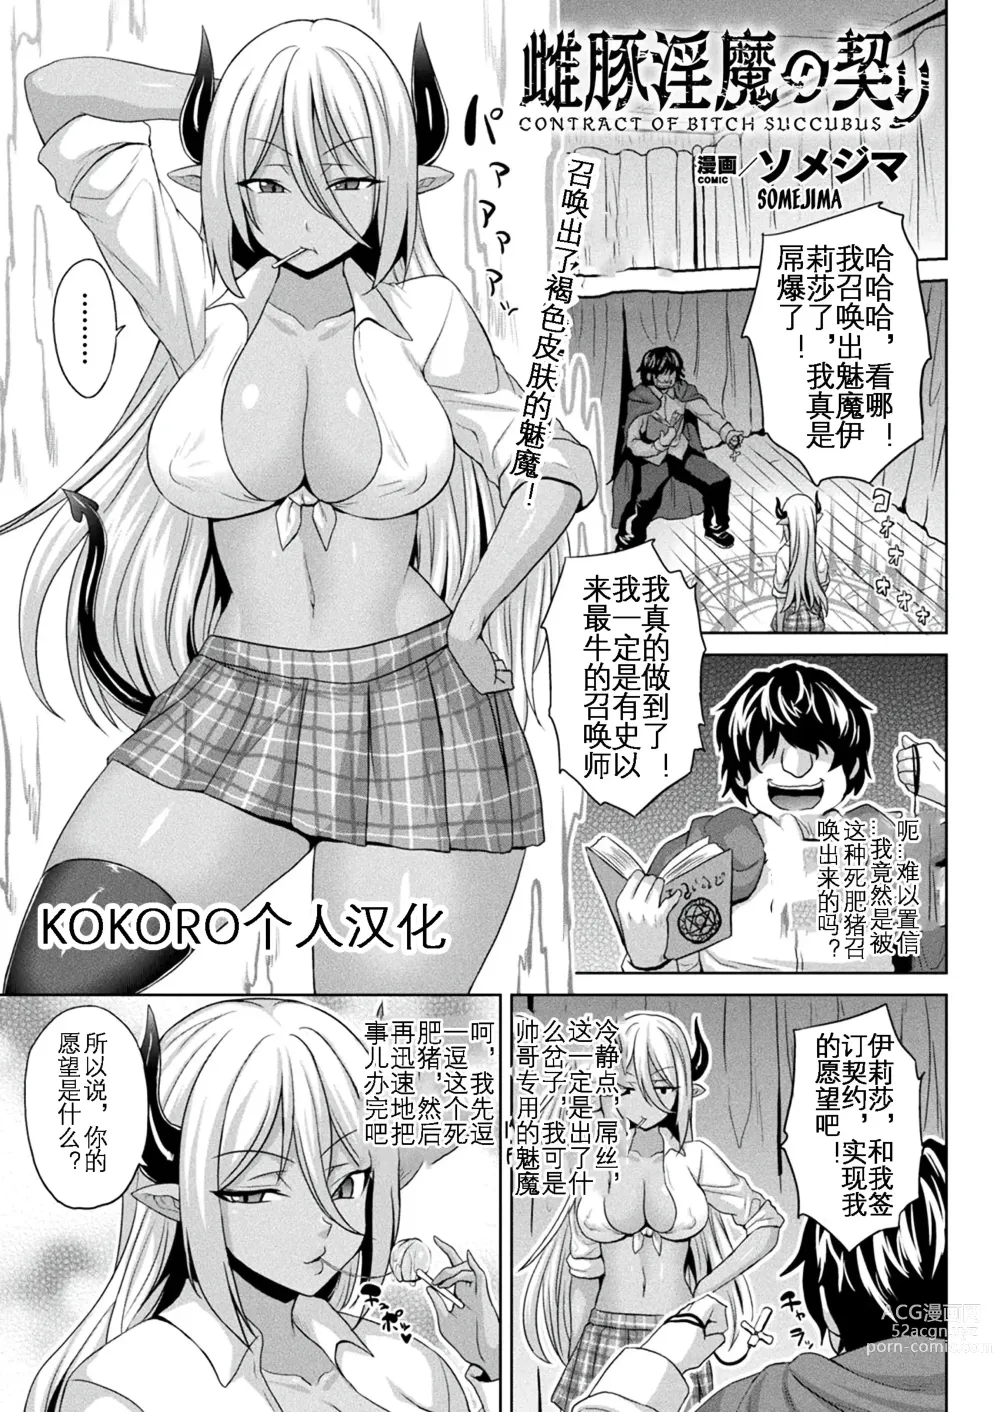 Page 1 of manga Mesubuta Inma no Chigiri - Contract of Bitch Succubus